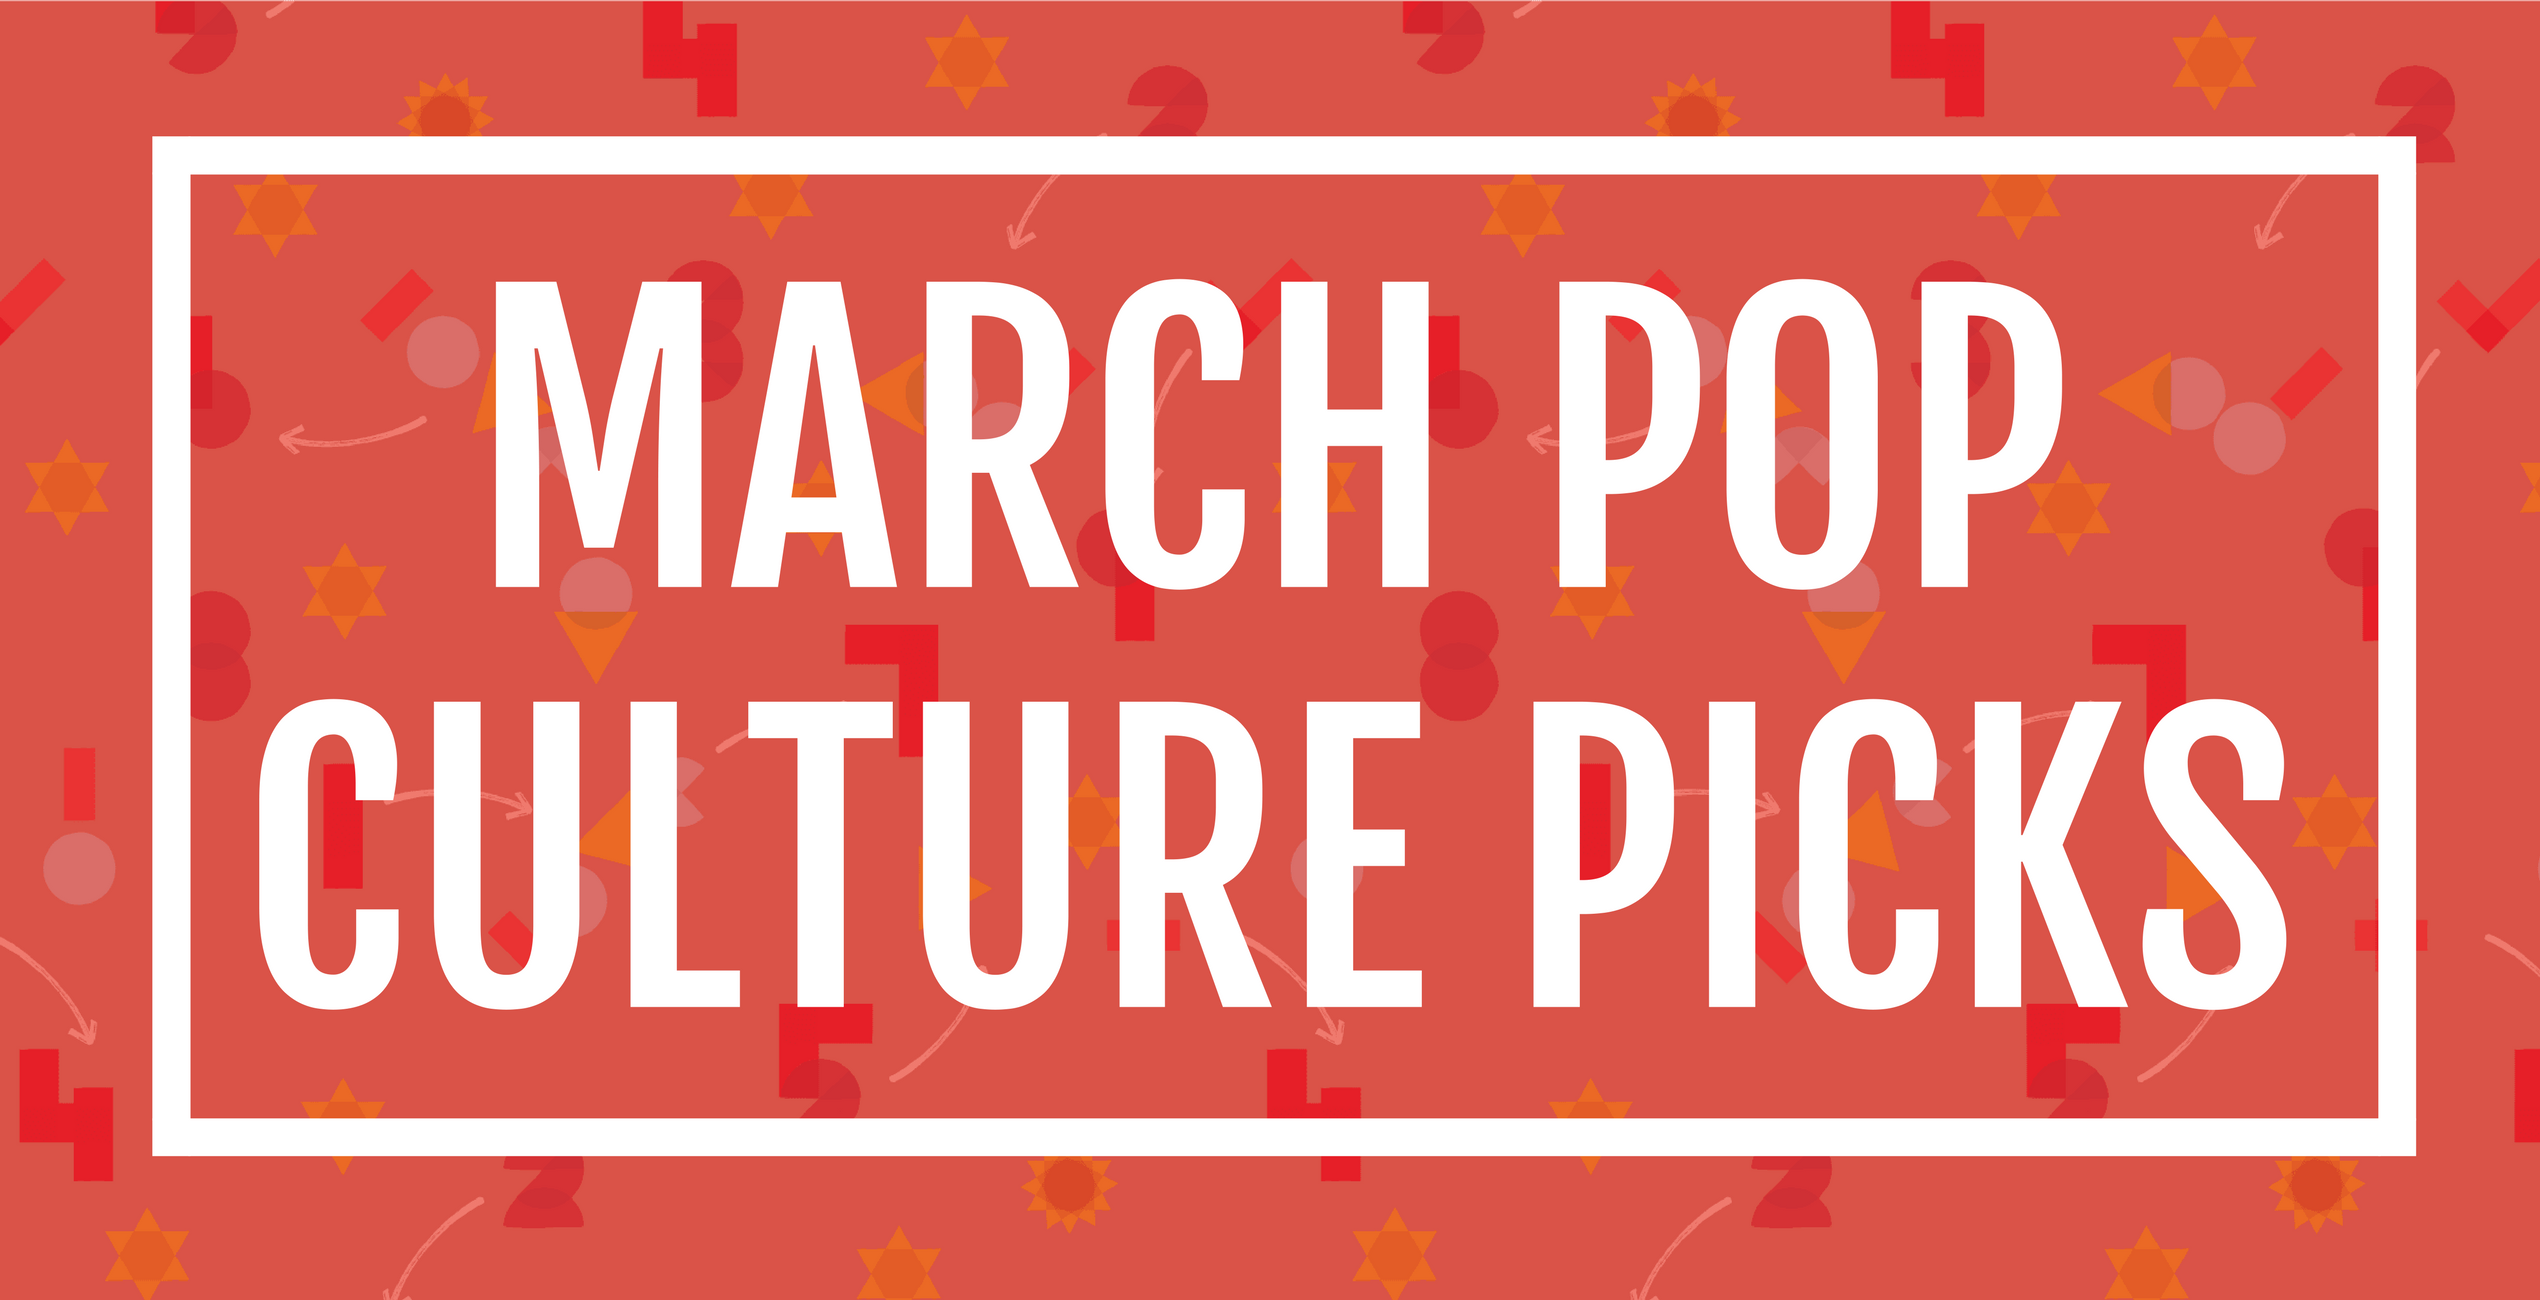 Appreciation Engine's Pop Culture Picks for March